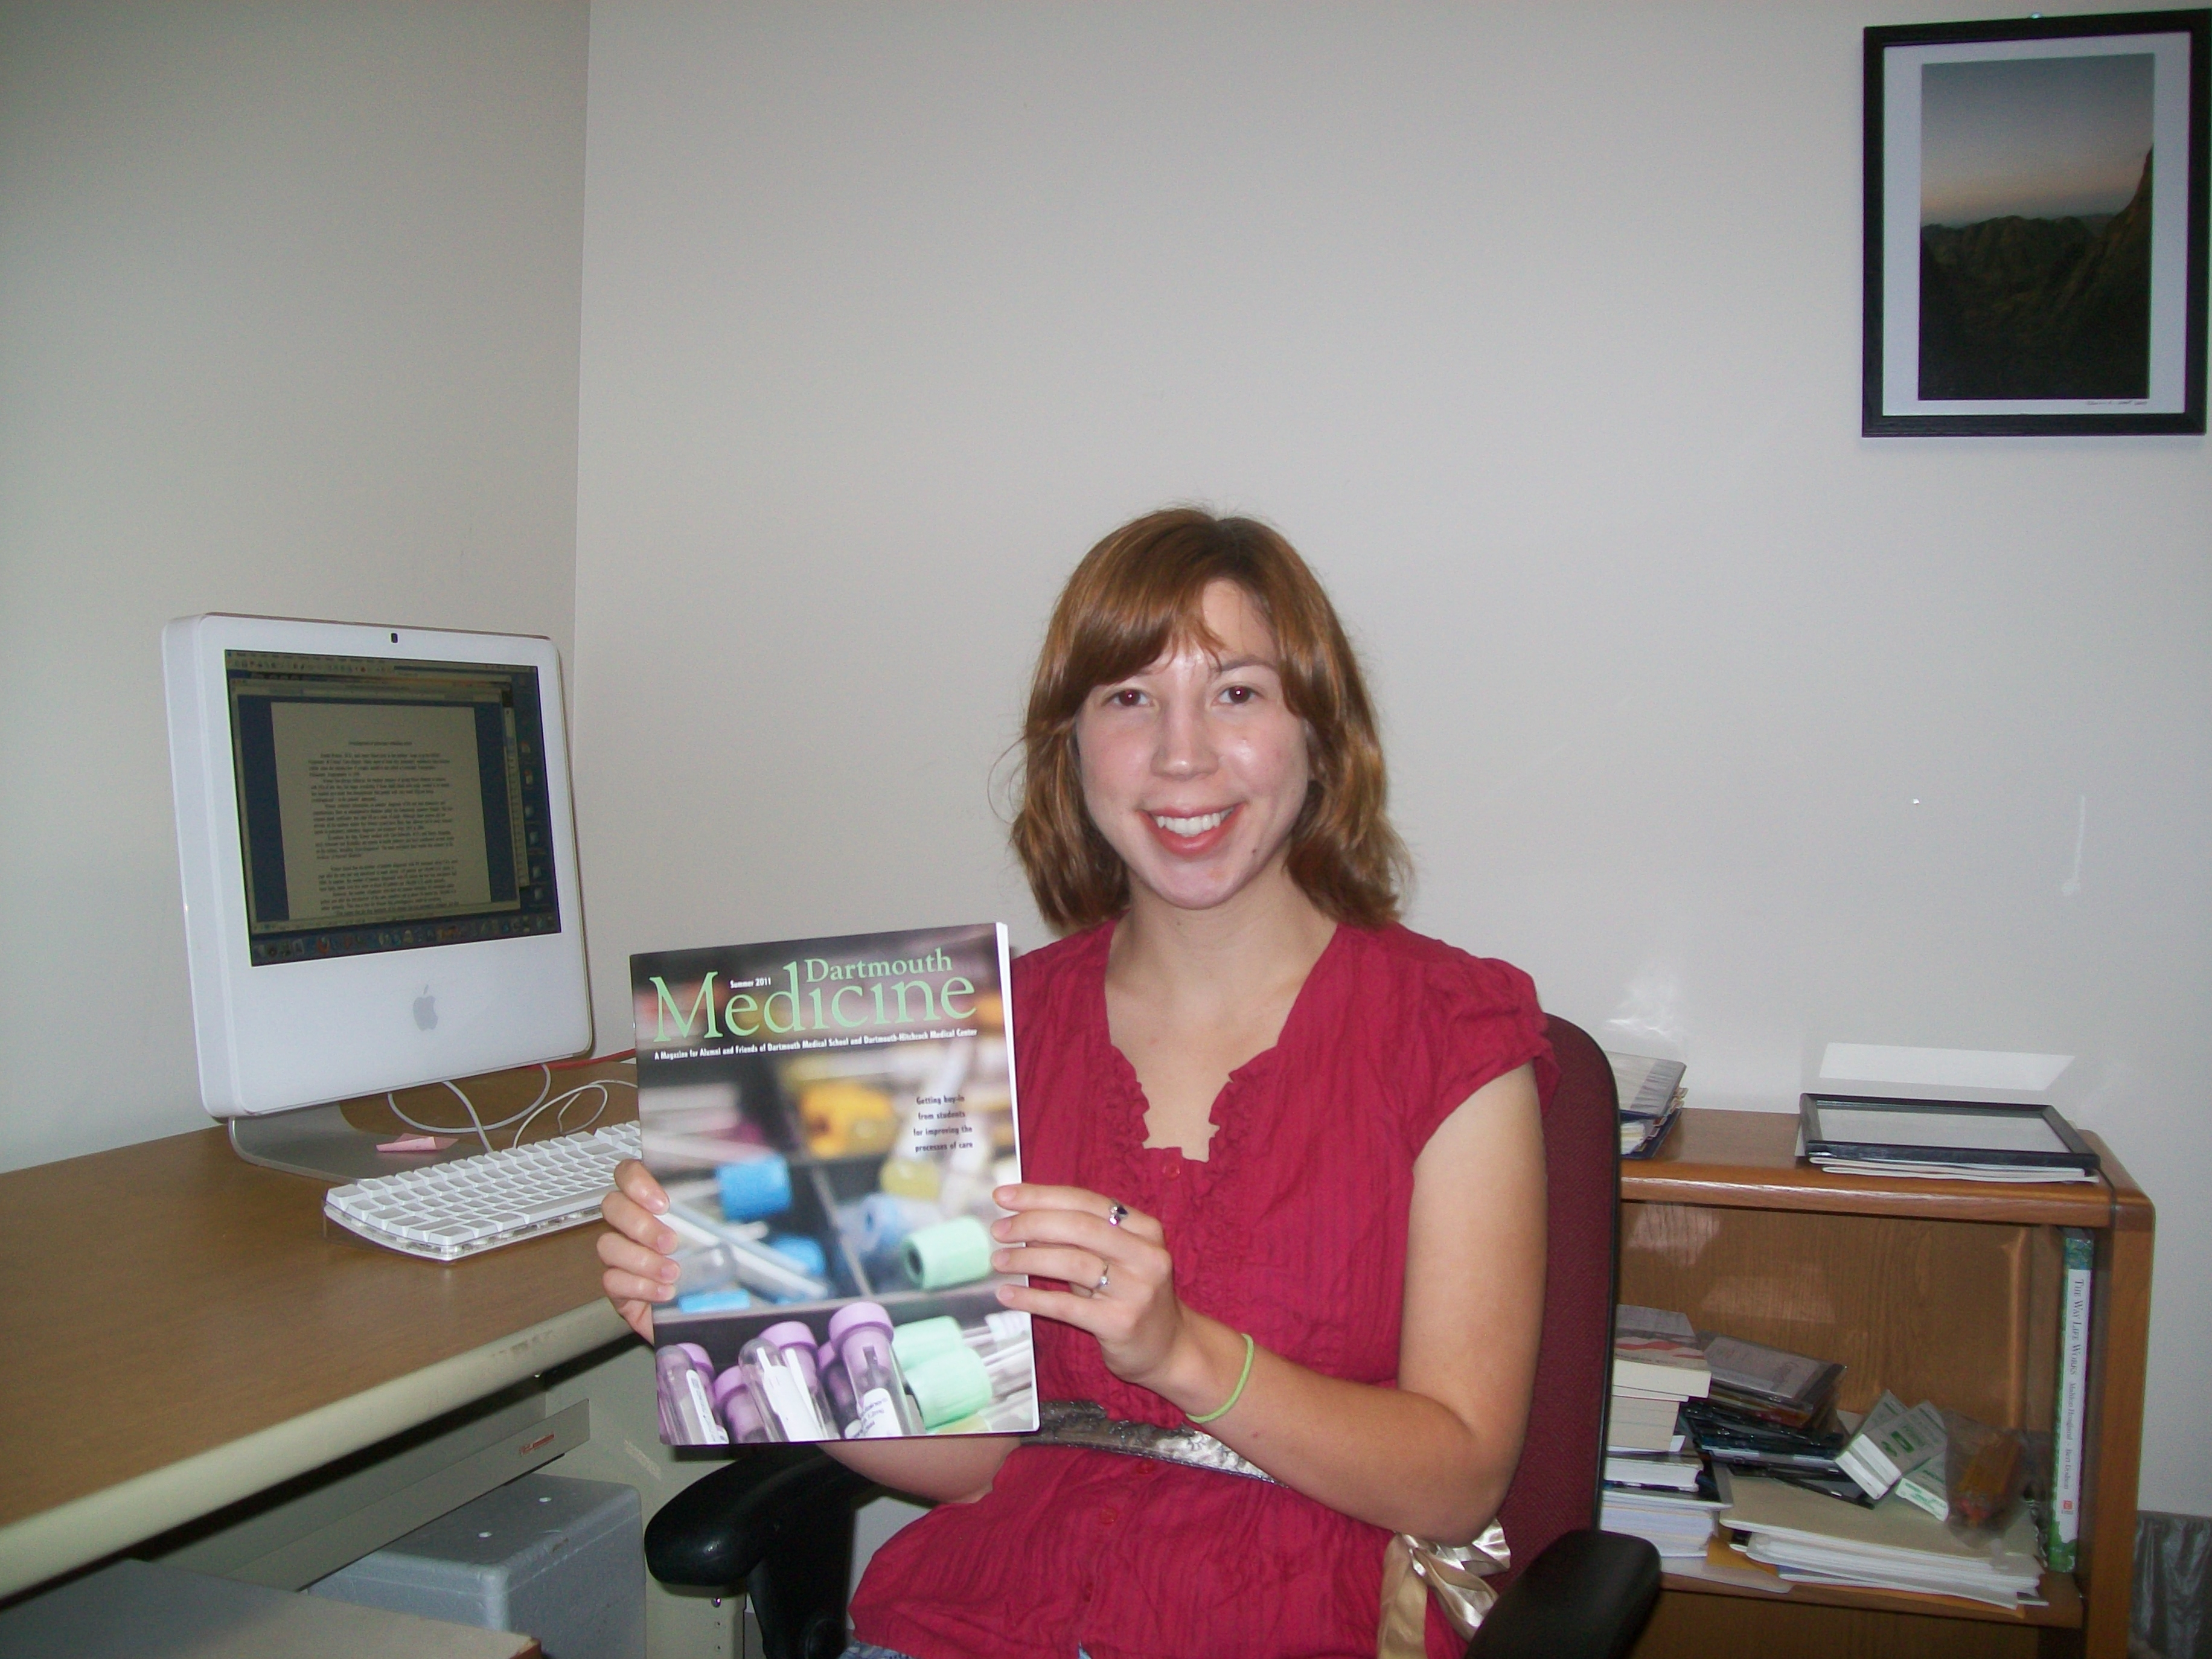 Honors student Christy Lewis describes summer internship with Dartmouth Medicine Magazine